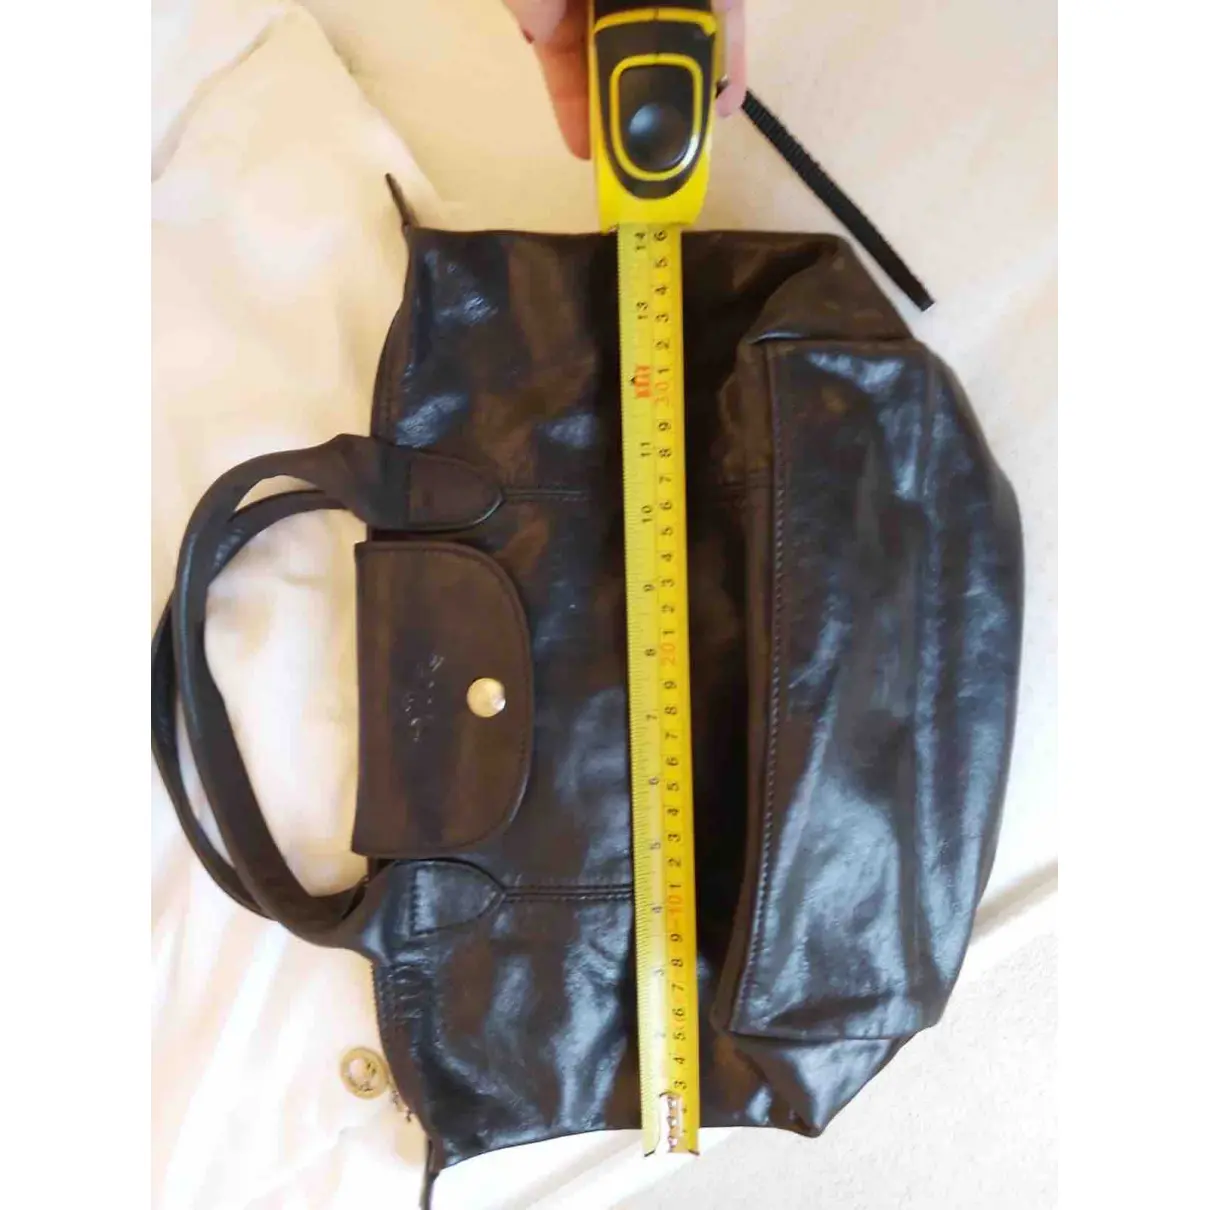 Pliage  leather handbag Longchamp